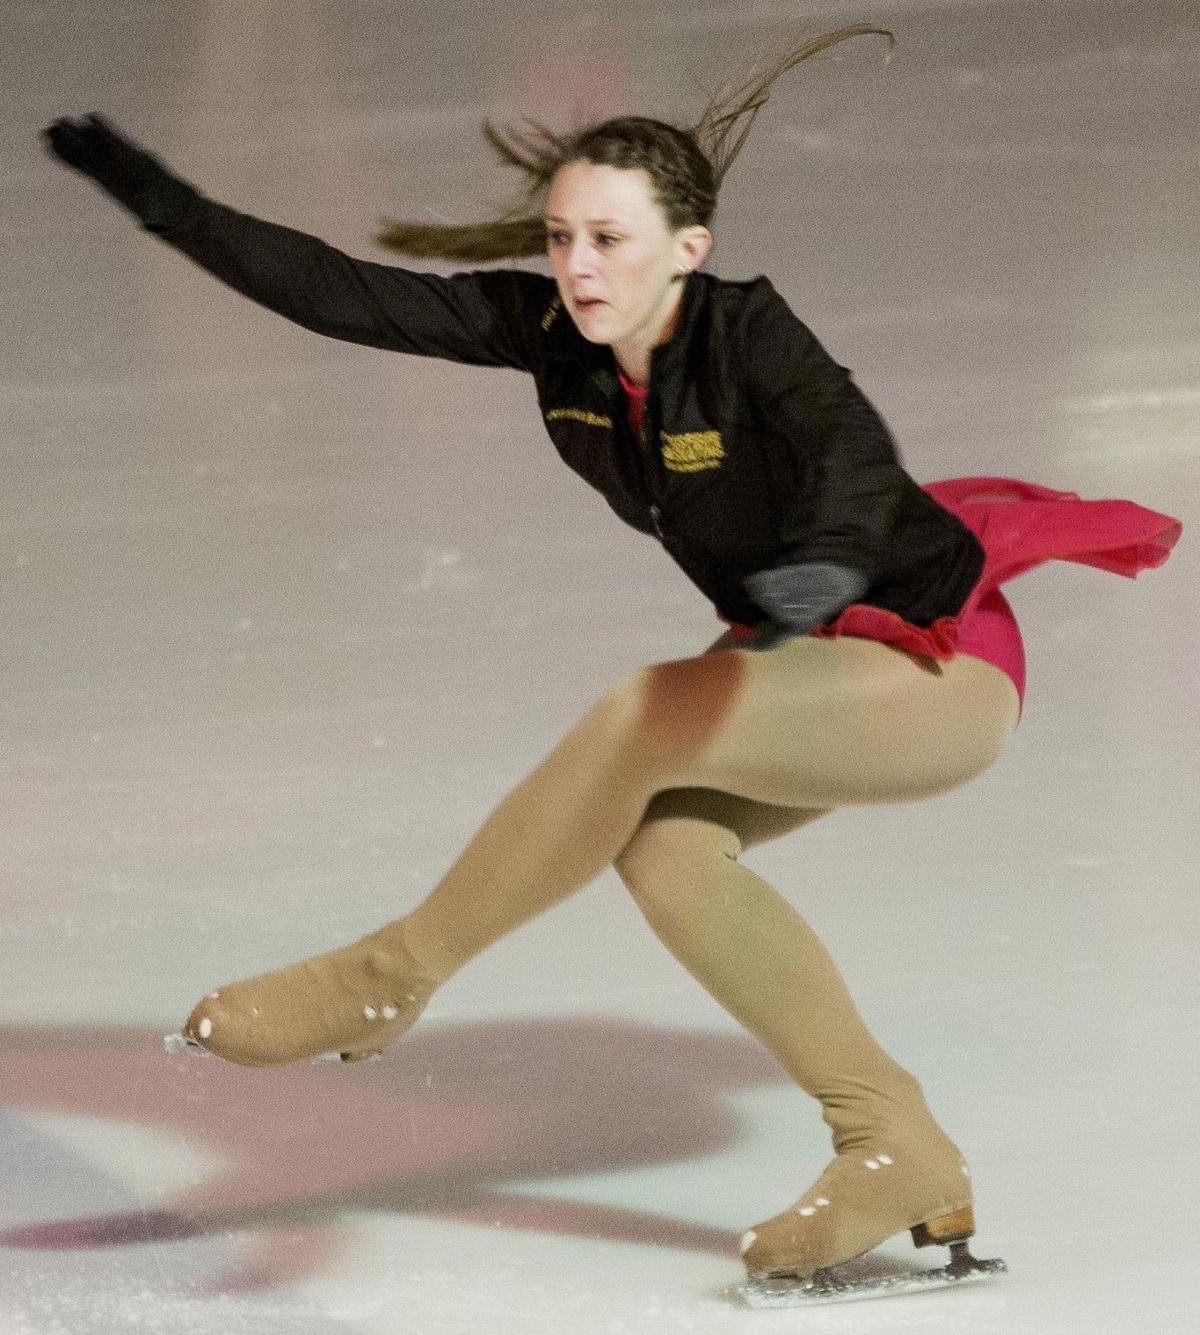 GOLD MOVES Elite skaters like Jessica Radzak highlight club's 40th